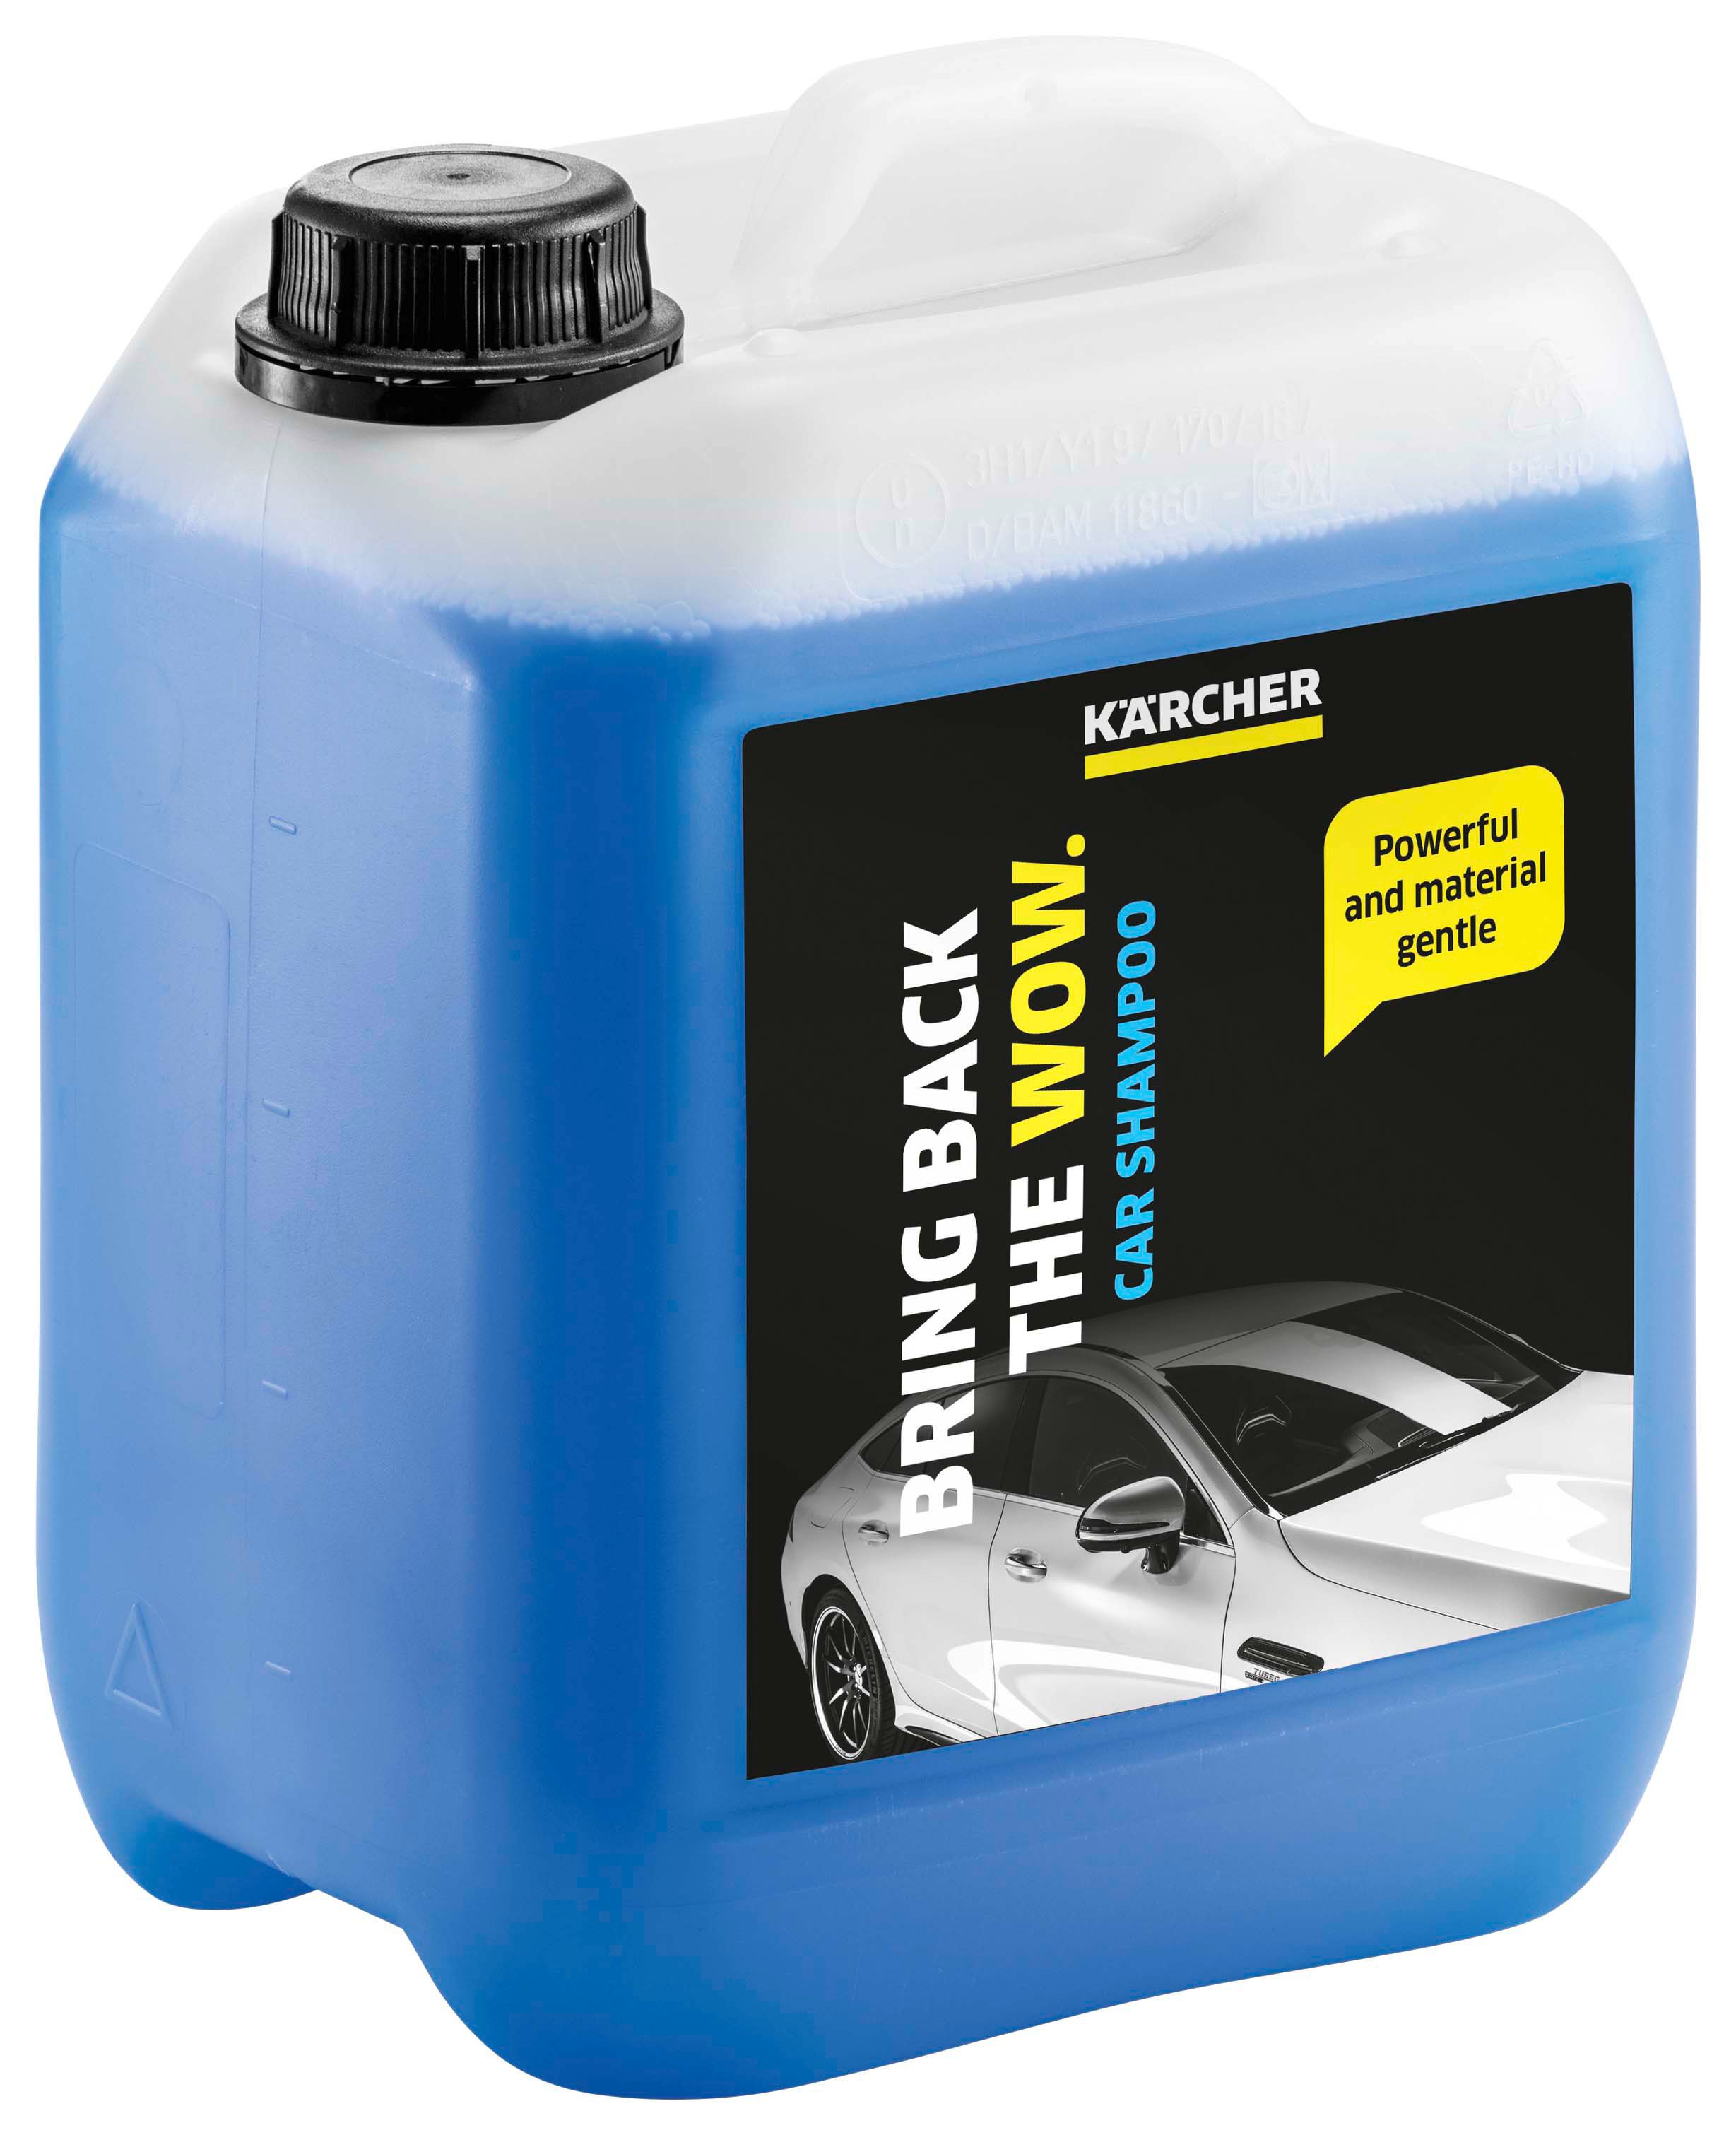 Image of Karcher 5L Foam Car Shampoo